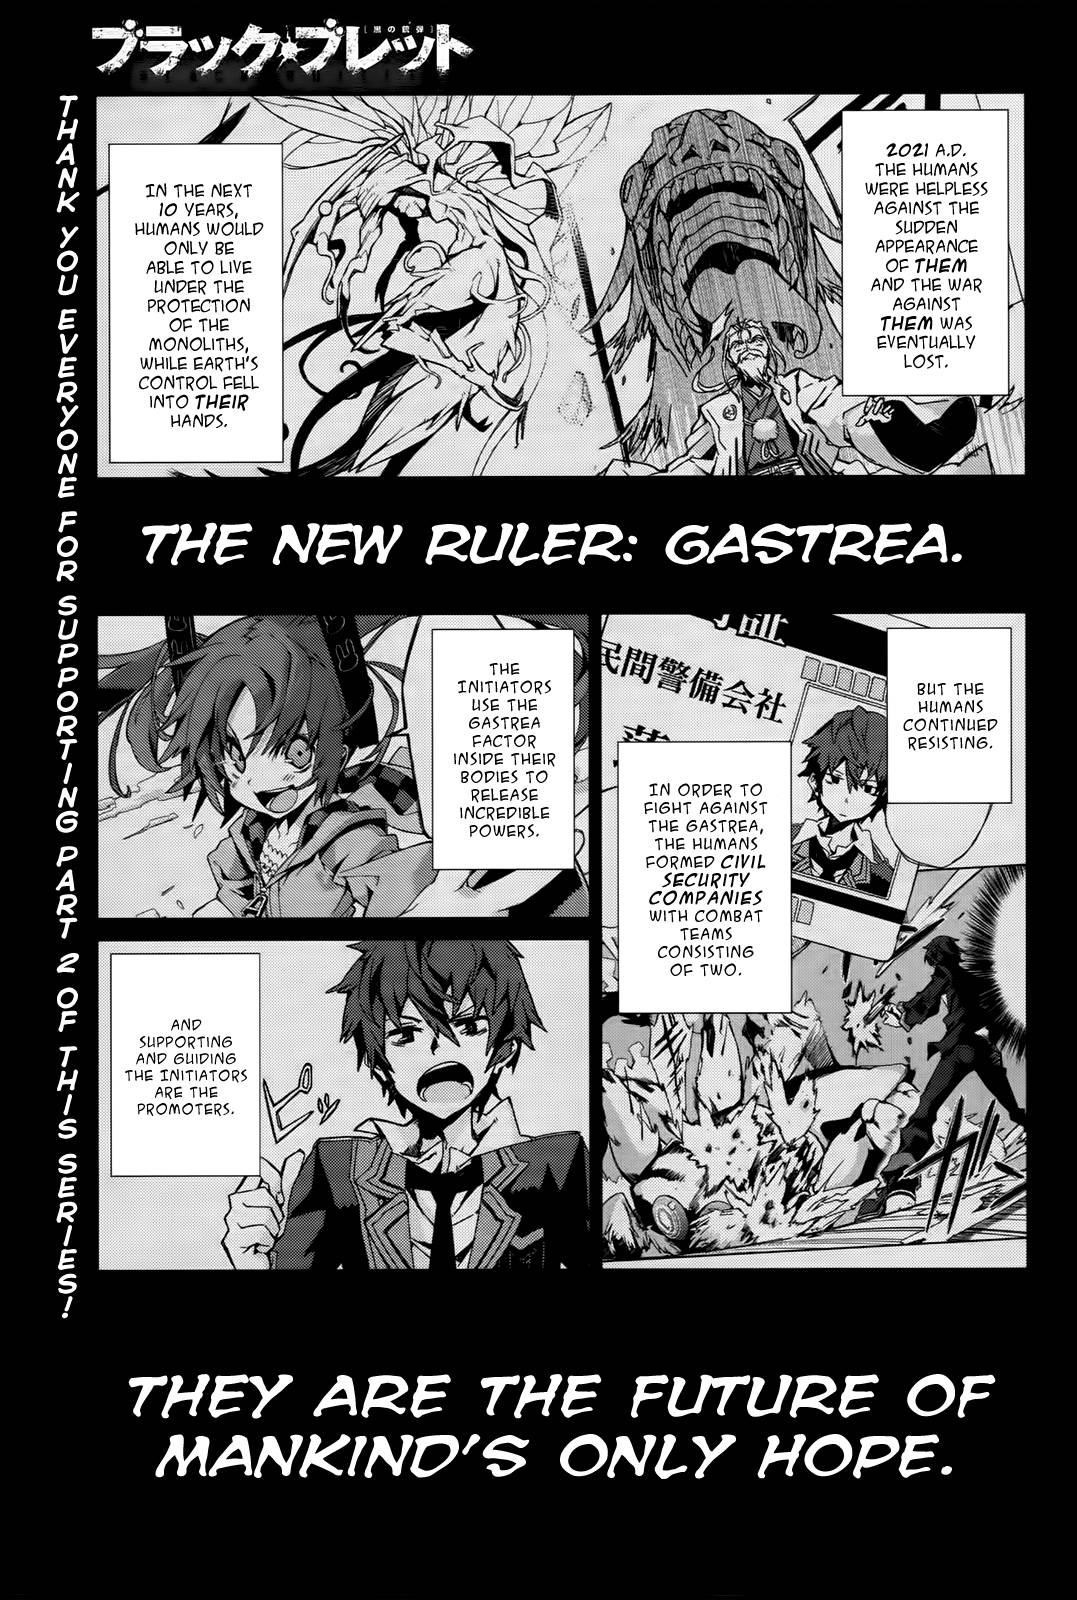 Black Bullet, Vol. 3 - manga (Black Bullet (manga), 3) (Volume 3)